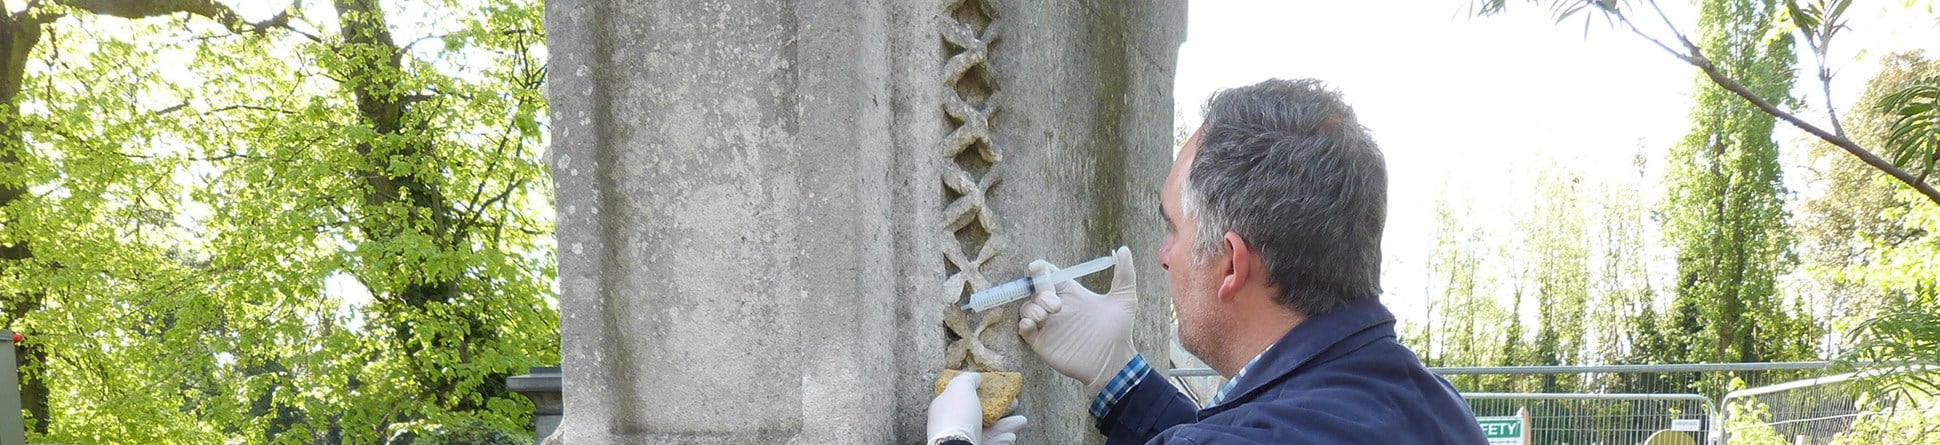 Applying nanolime to a limestone memorial in Kensal Green Cemetery, London